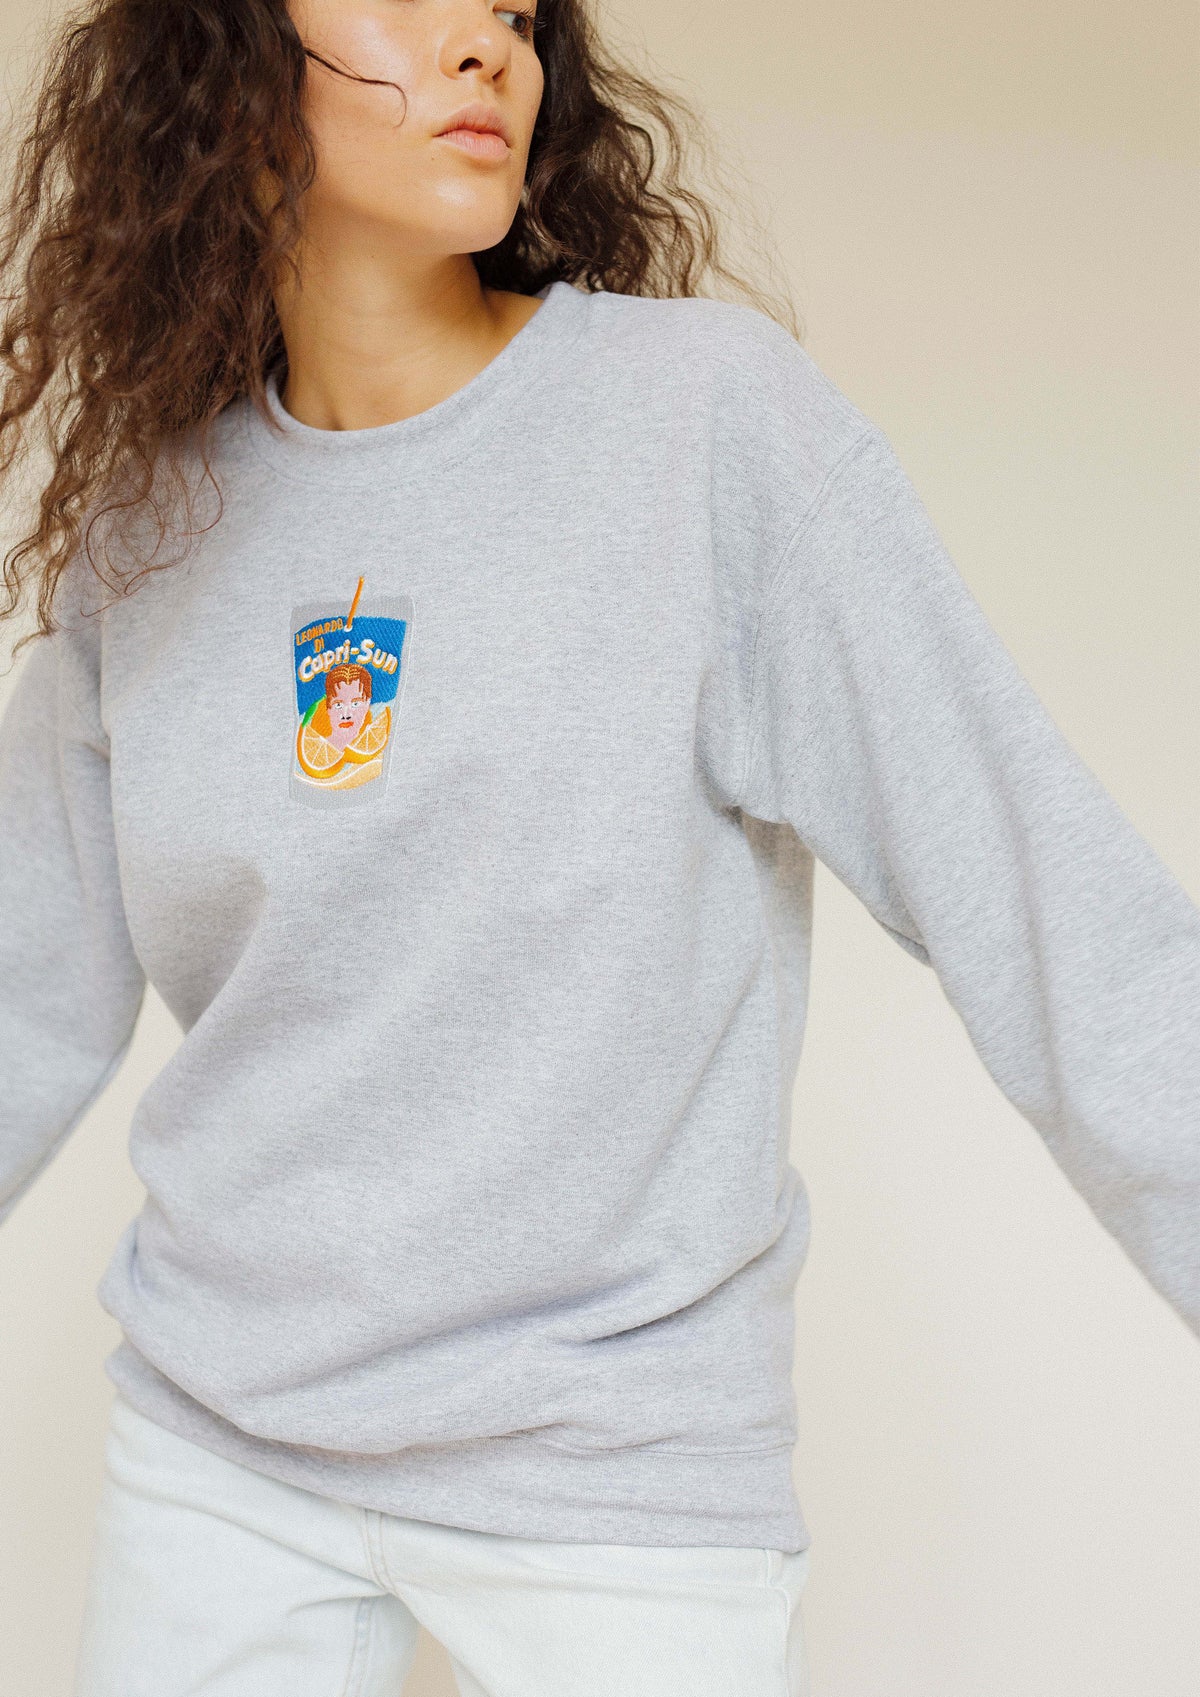 Leonardo DiCapriSun Embroidered Sweatshirt